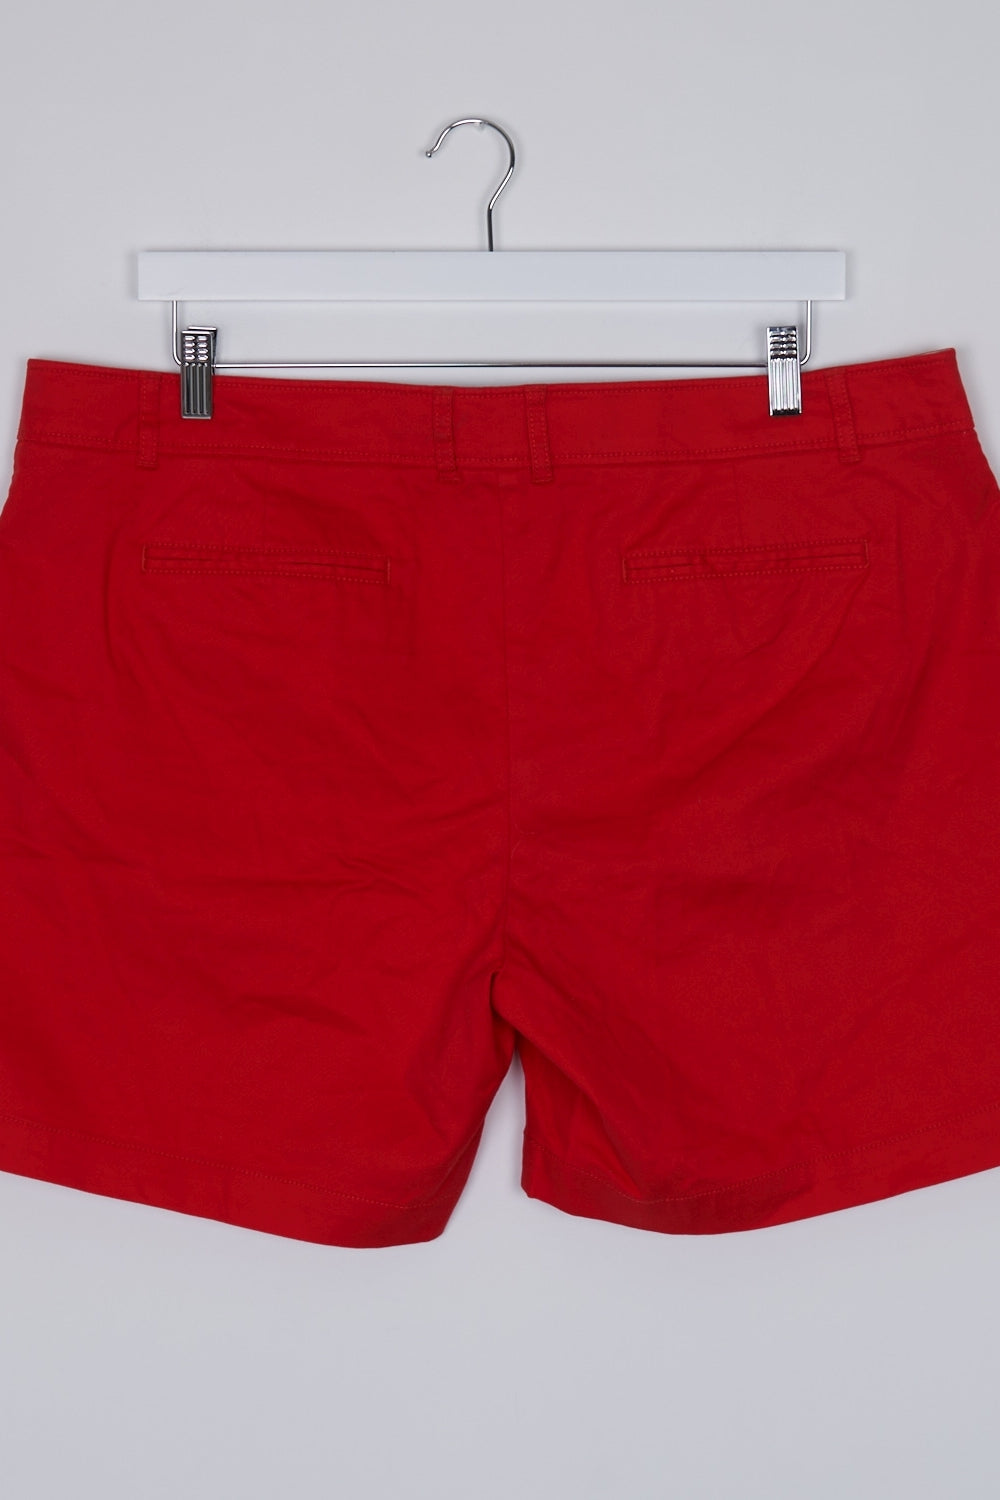 Sportscraft Red Chino Shorts 18